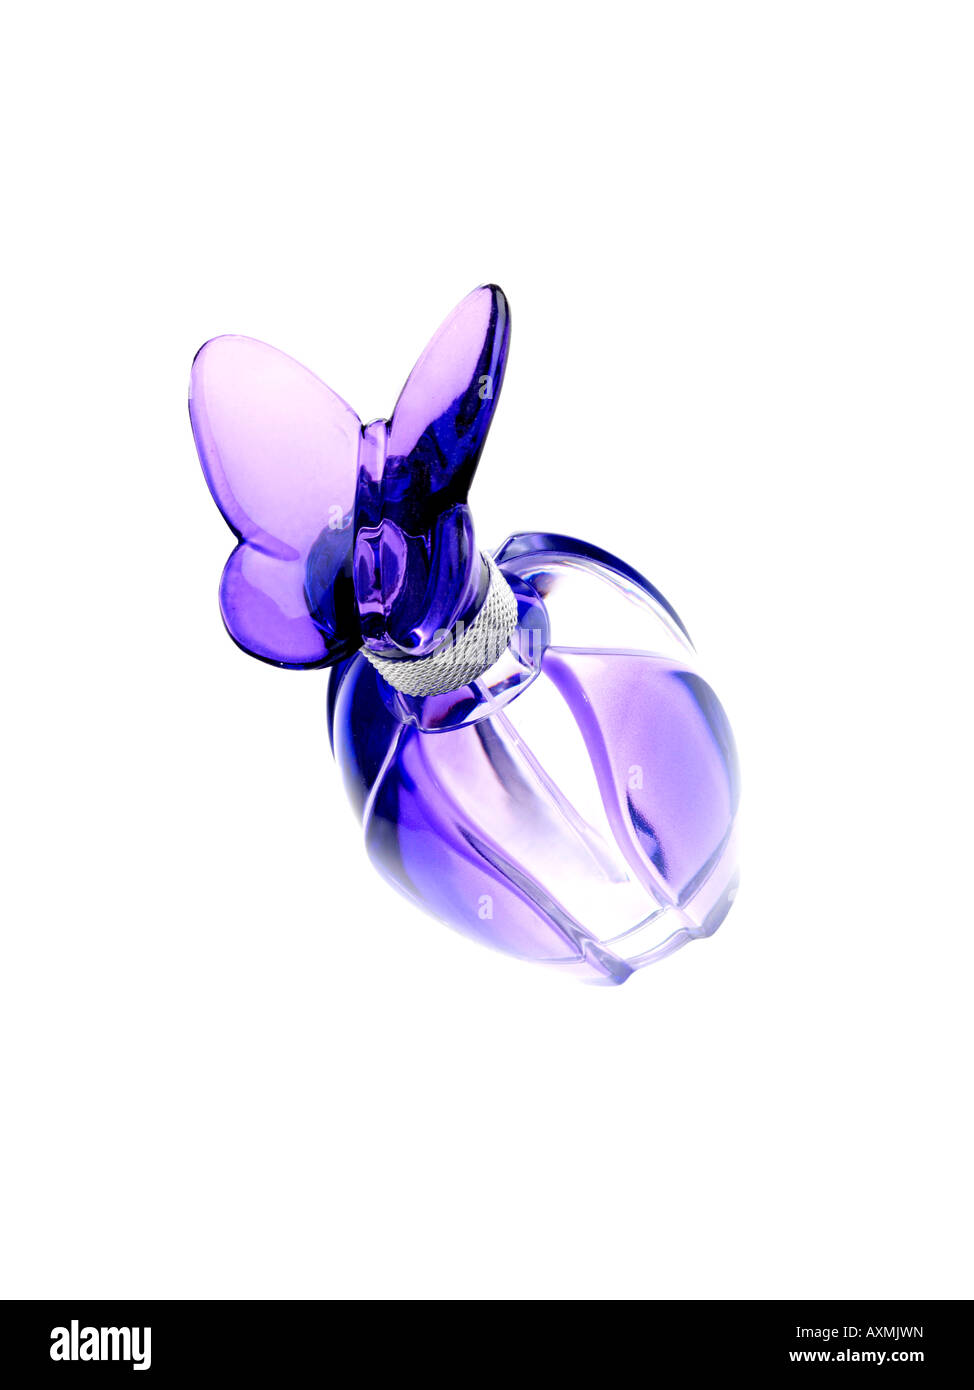 Mariah carey perfume Imágenes recortadas de stock - Alamy